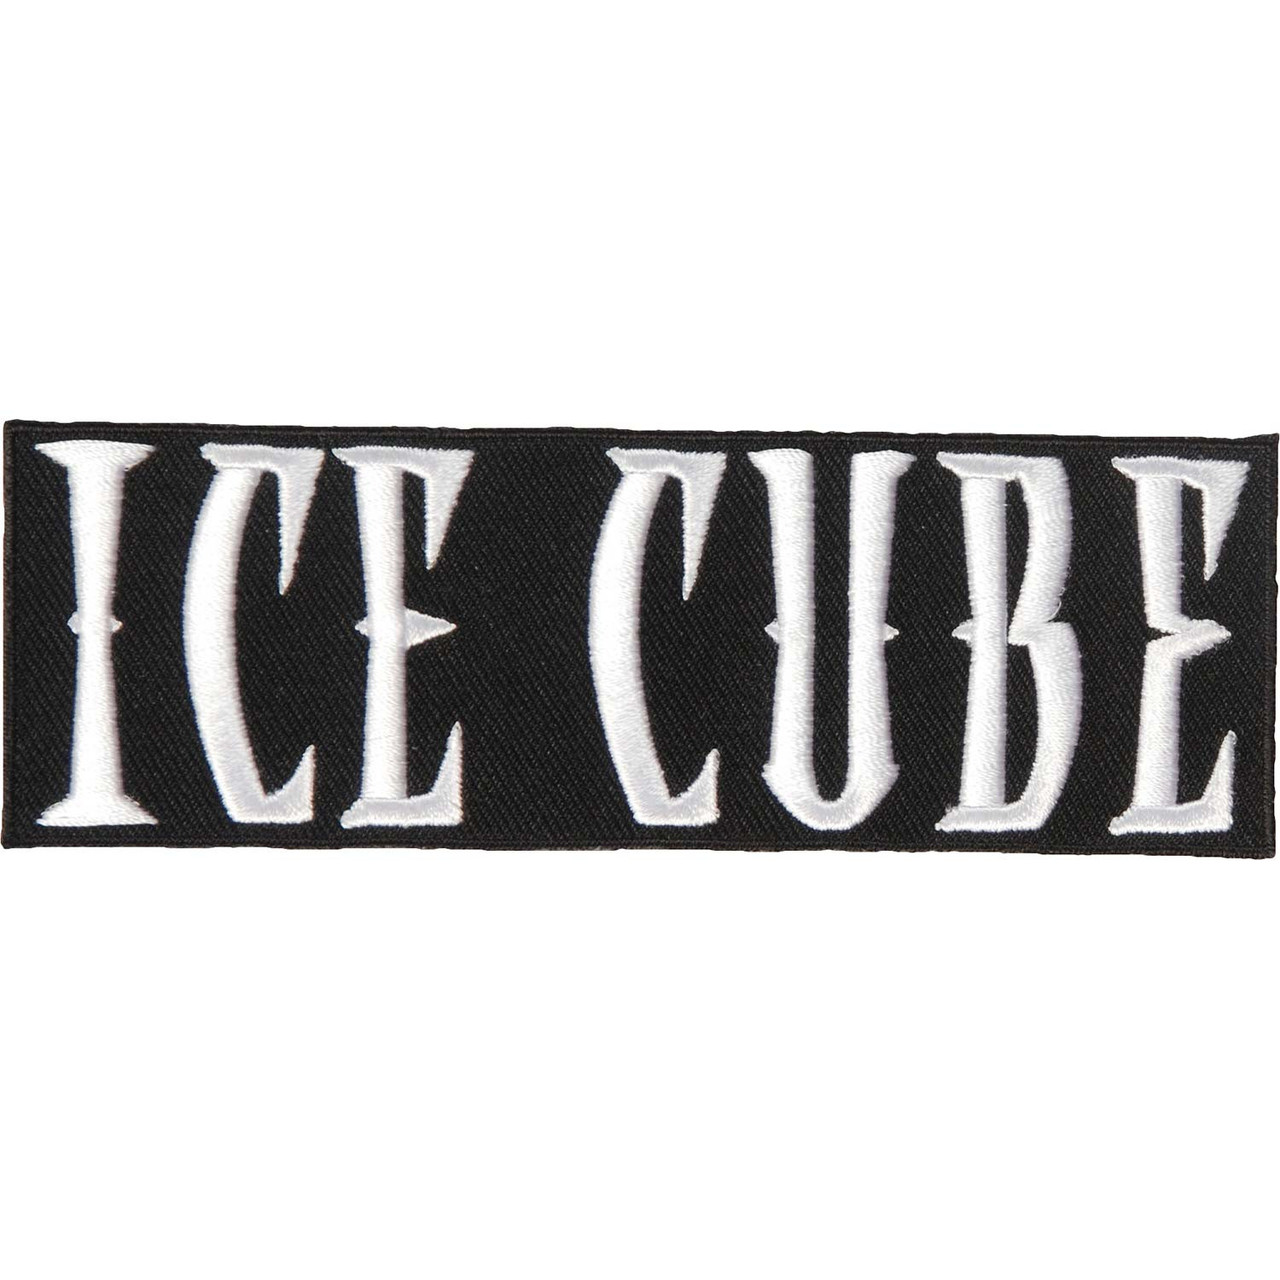 Ice Cube Raiders Logo Patch - Merch2rock Alternative Clothing